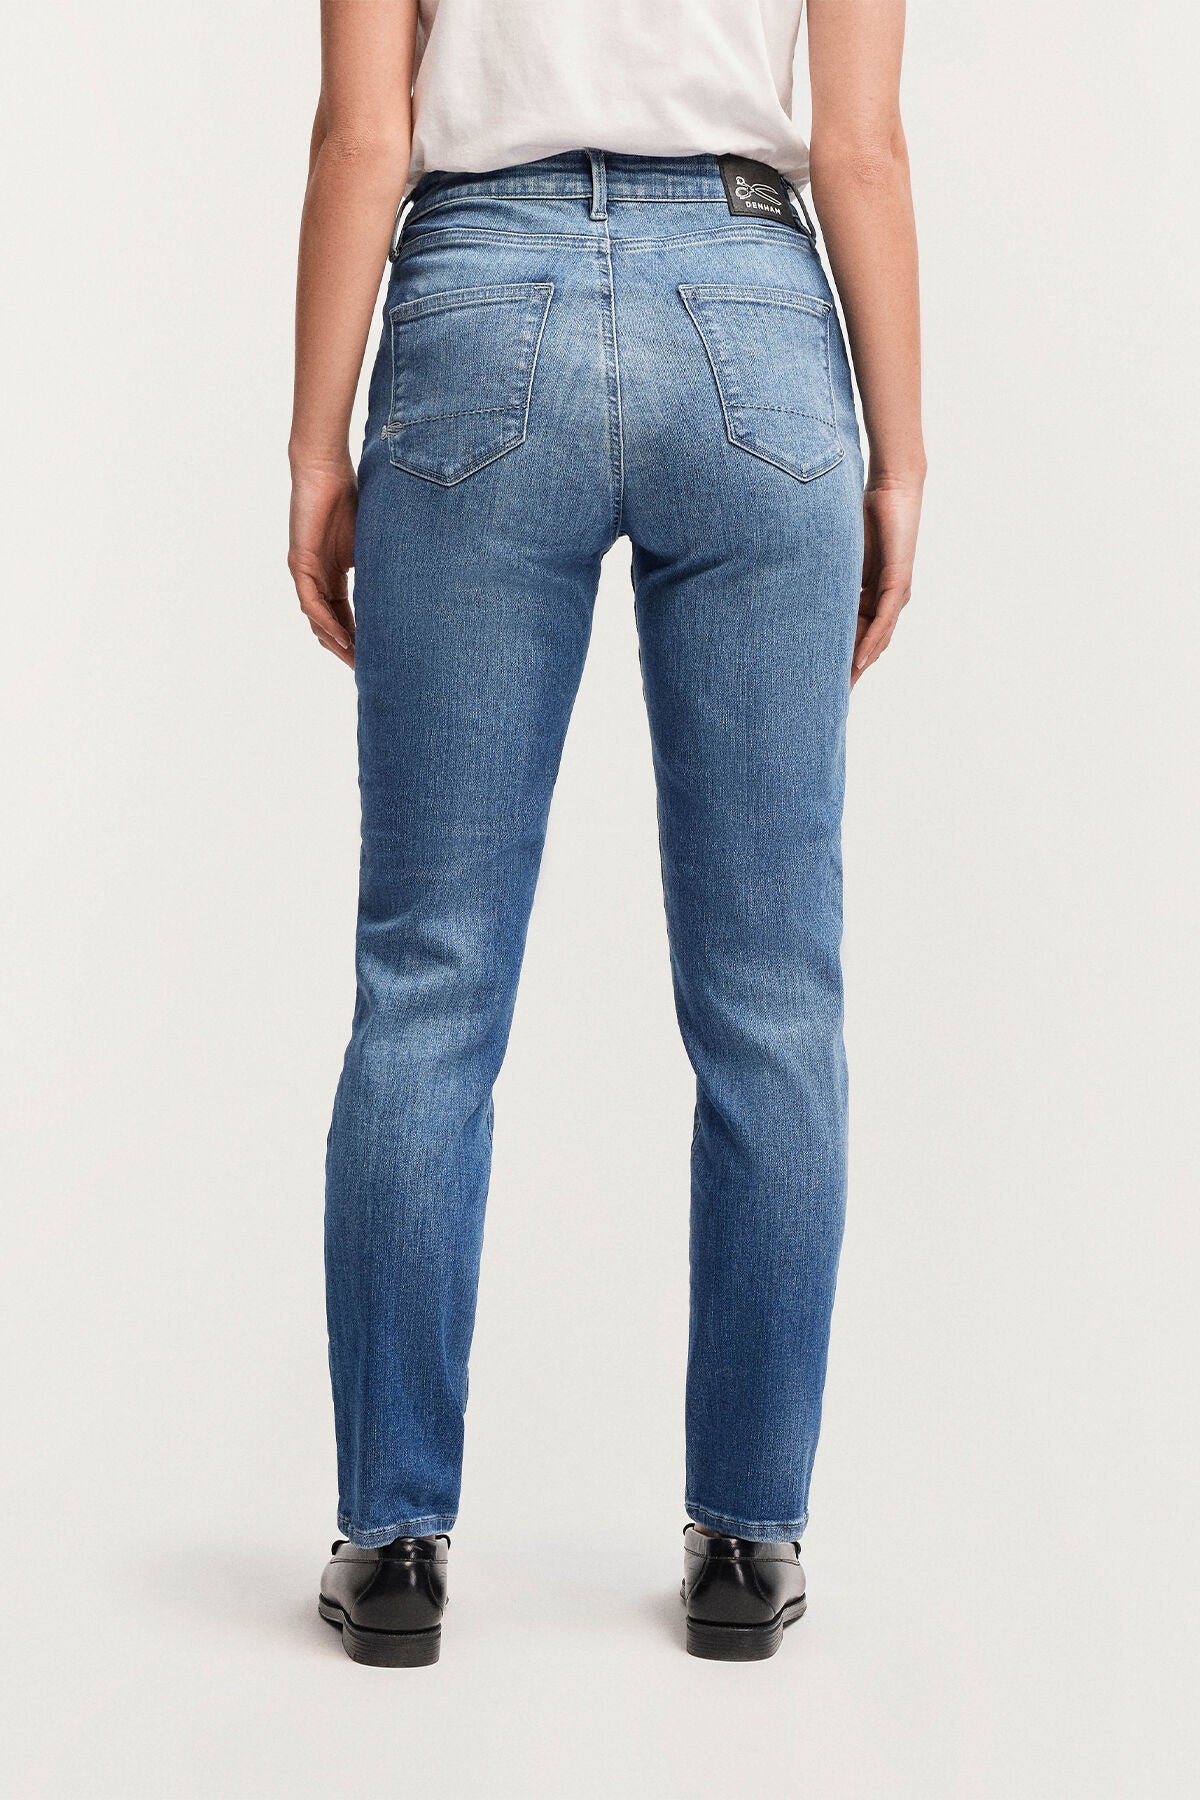 The back view of a slim woman wearing Denham's MARGOT High Slim - Light Worn Indigo blue jeans.